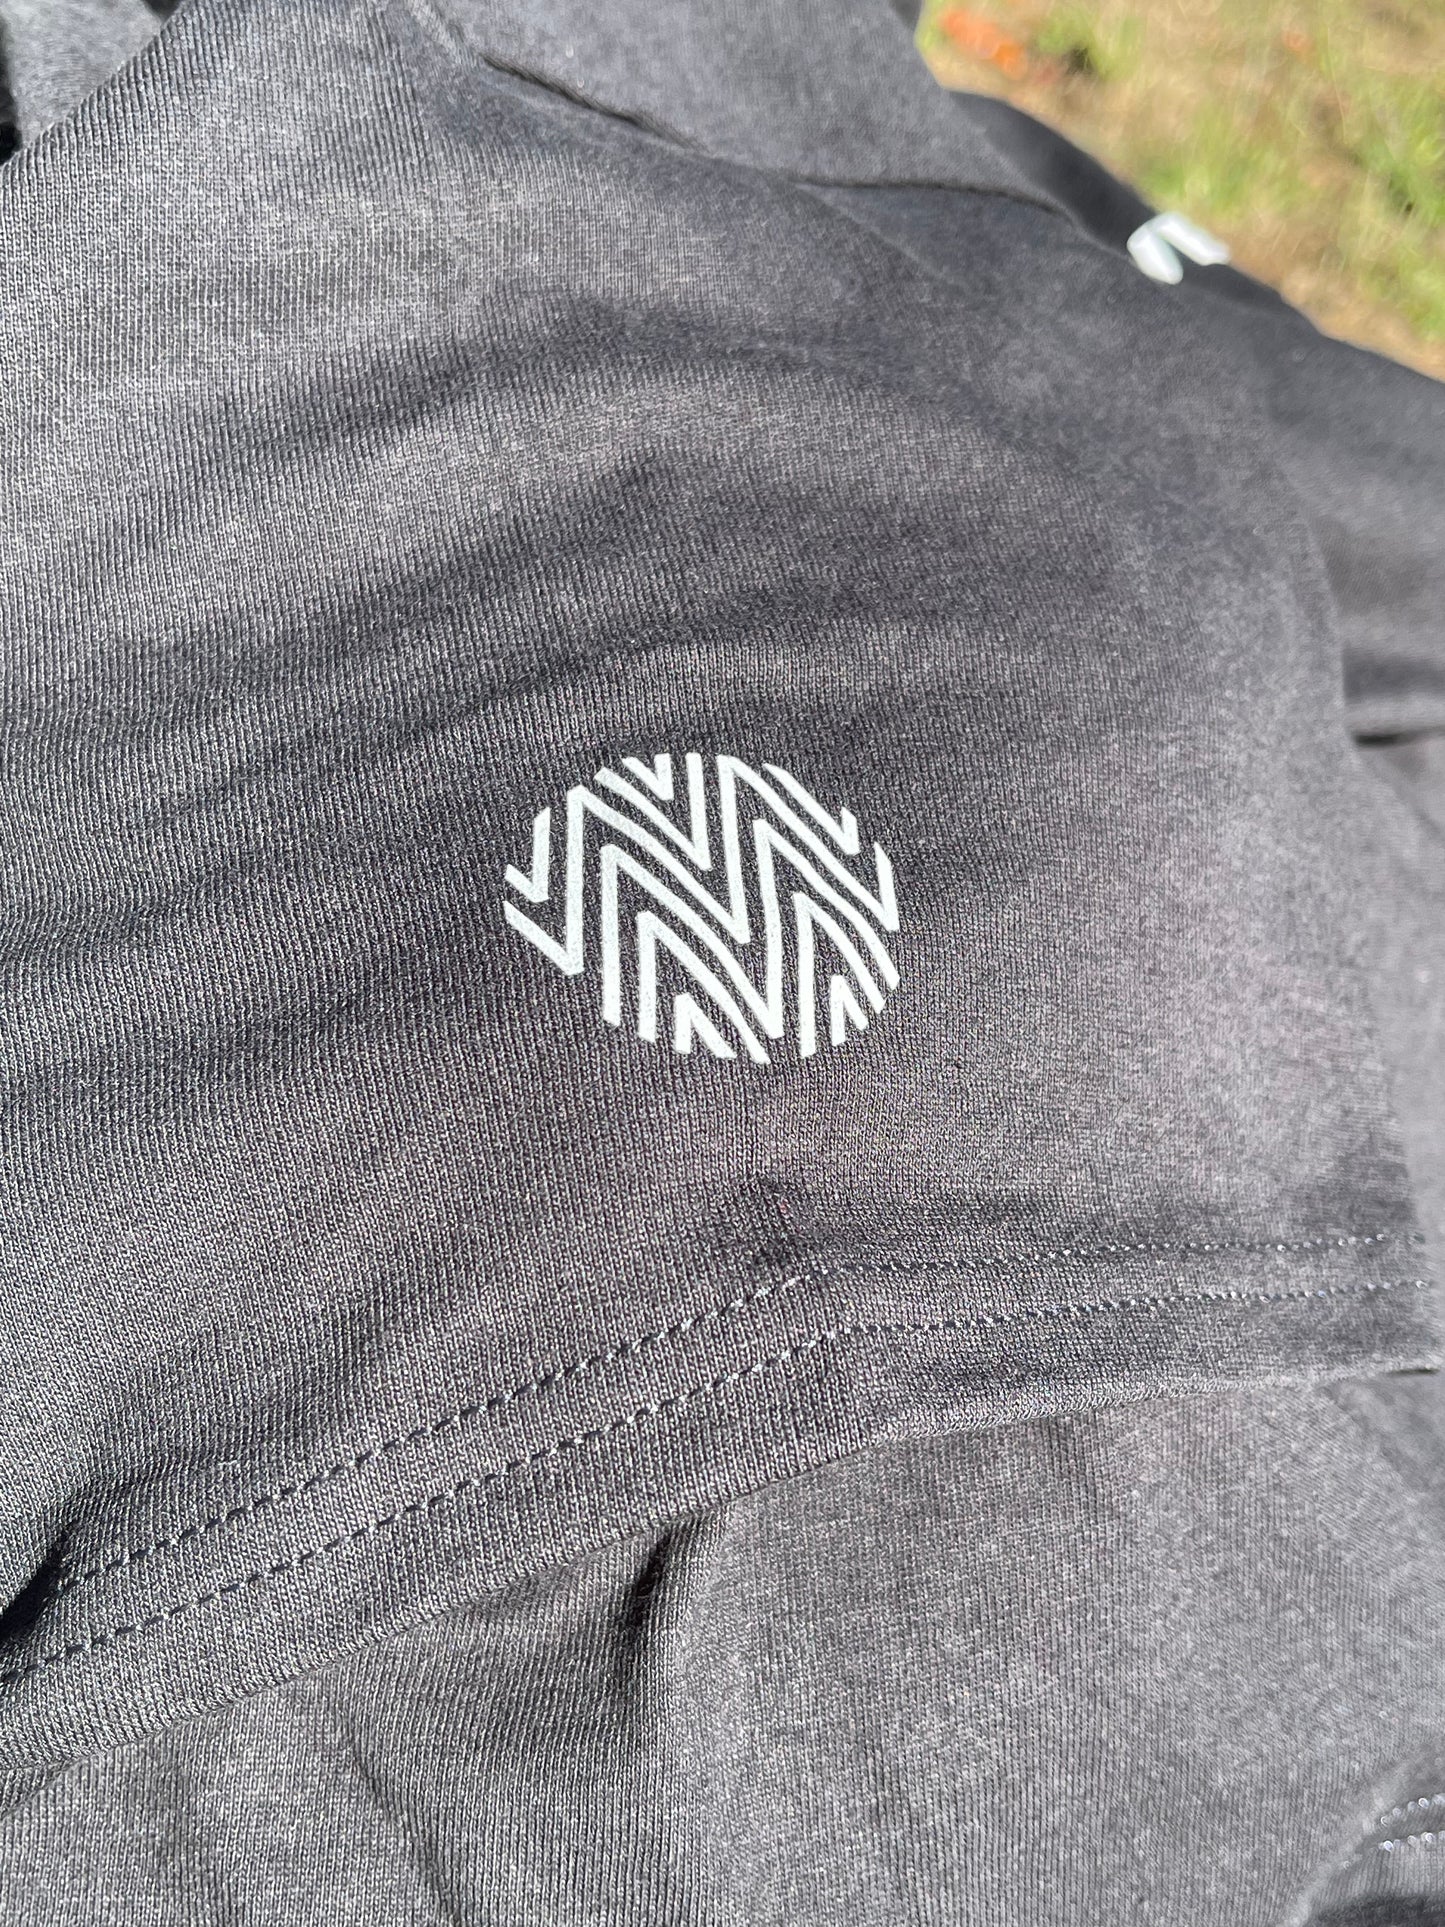 Wooksauce Classic Logo Black T Shirt